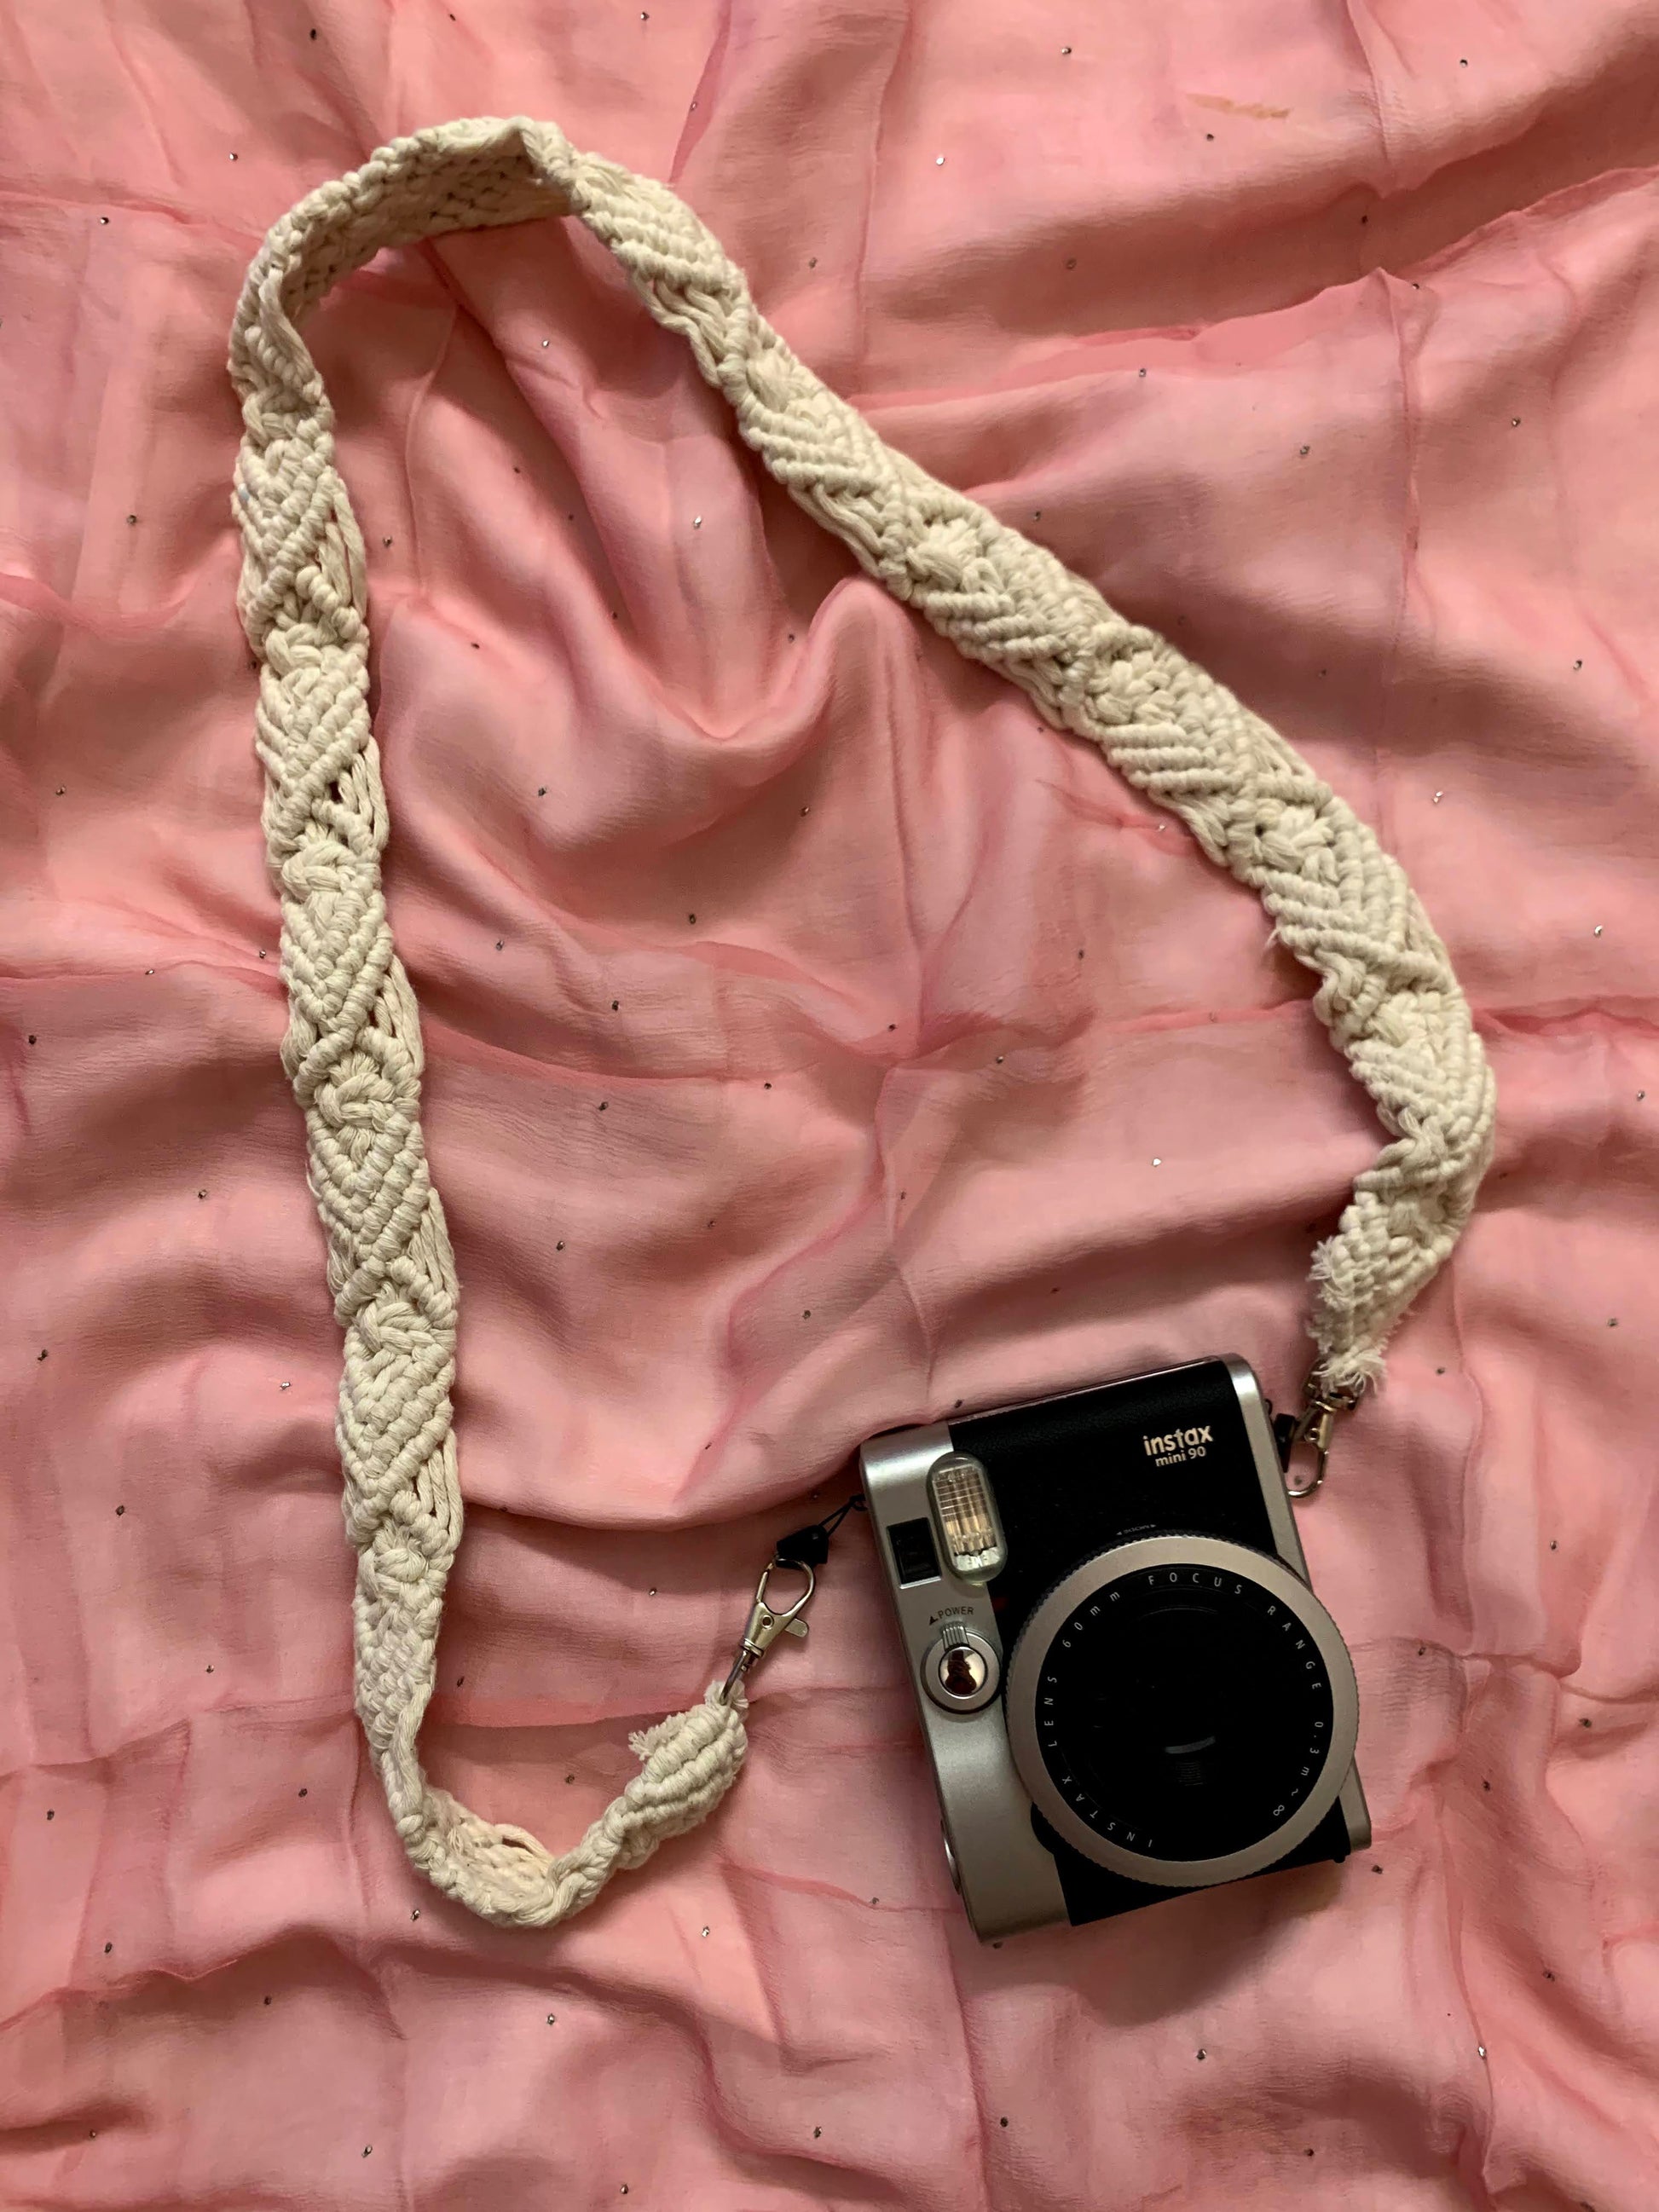 Fitoori Banjaaran's Macrame Sling Belts for Bags and Cameras